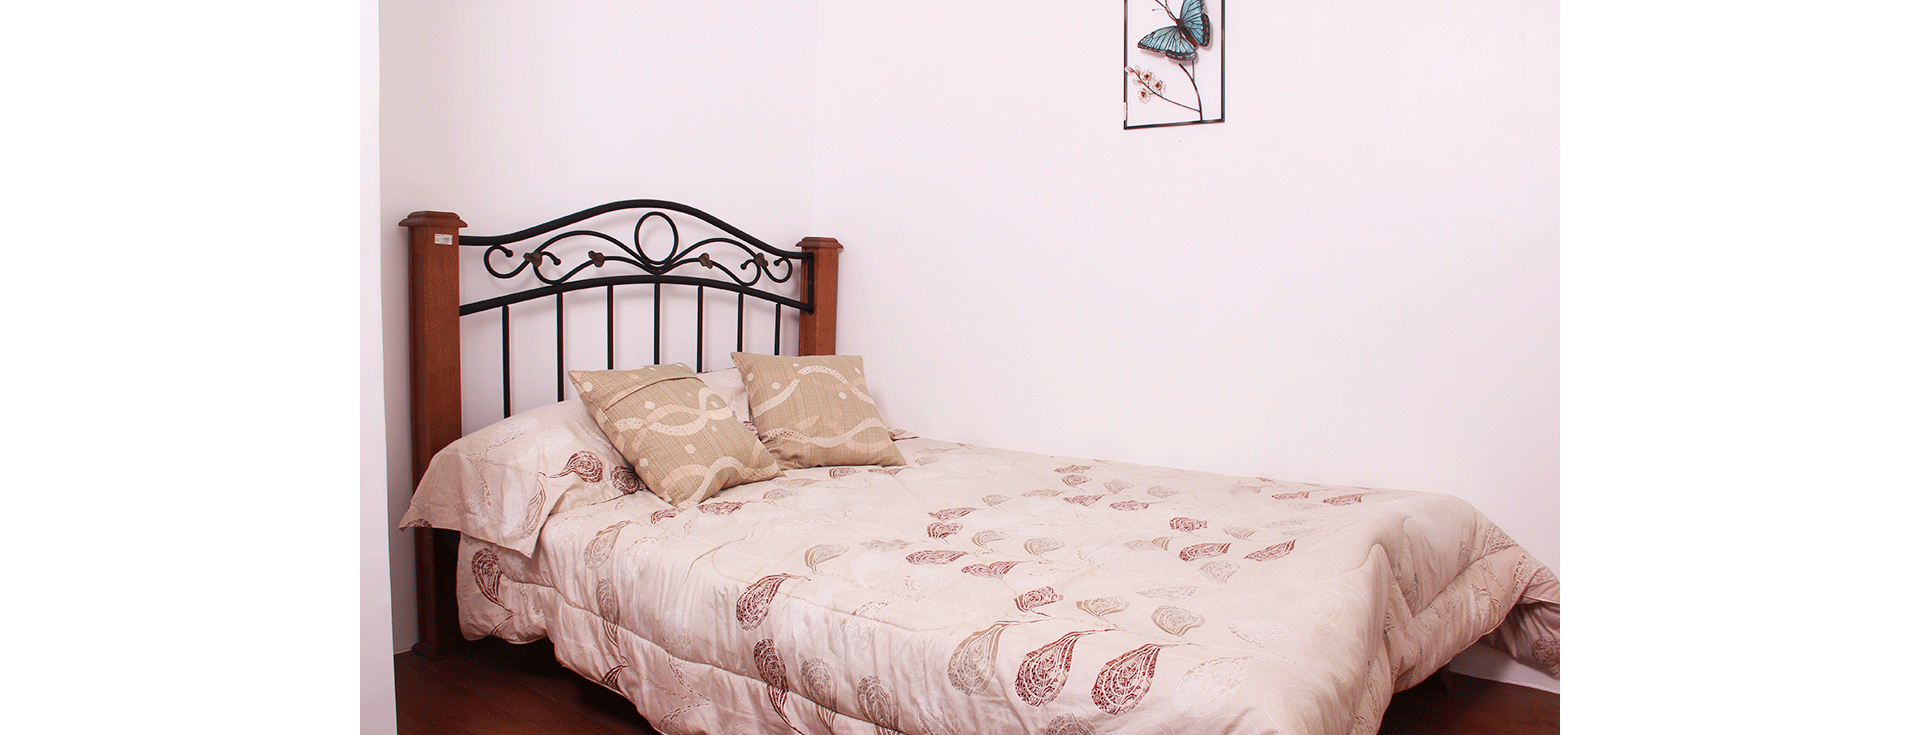 LIOR_Amora Master Bedroom